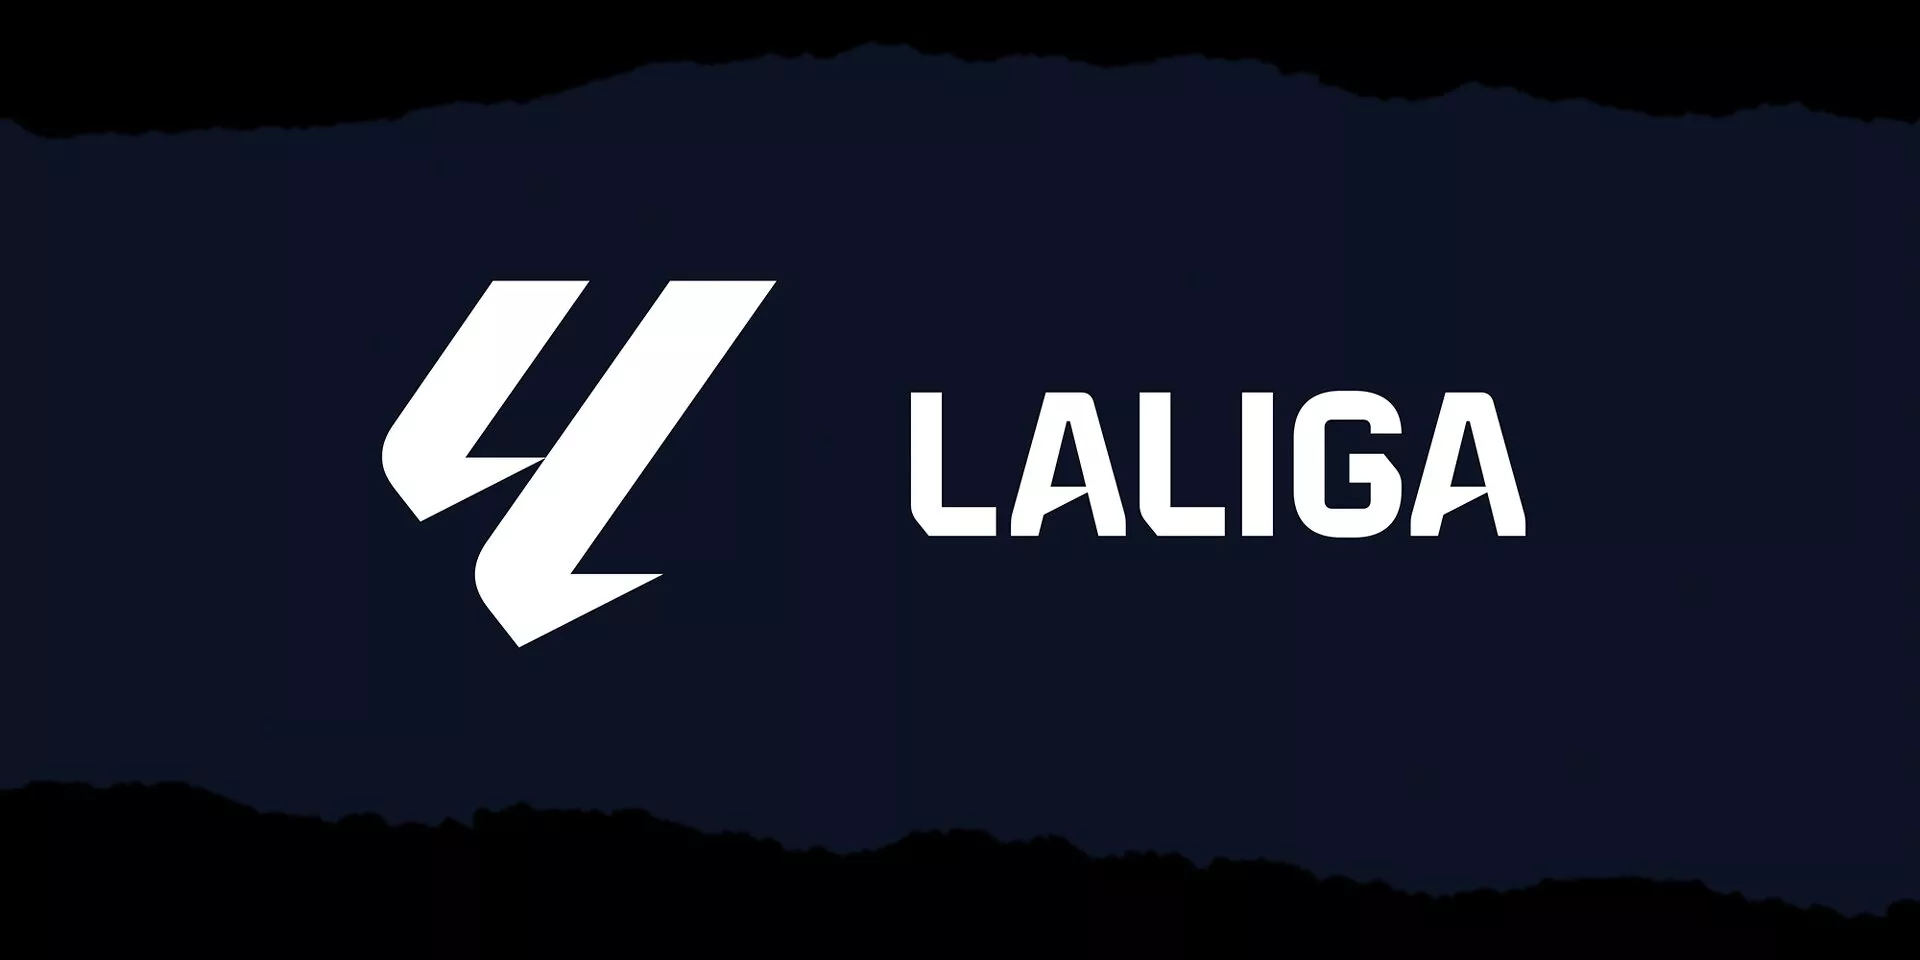 LaLiga reveals new branding, logo and strategic positioning